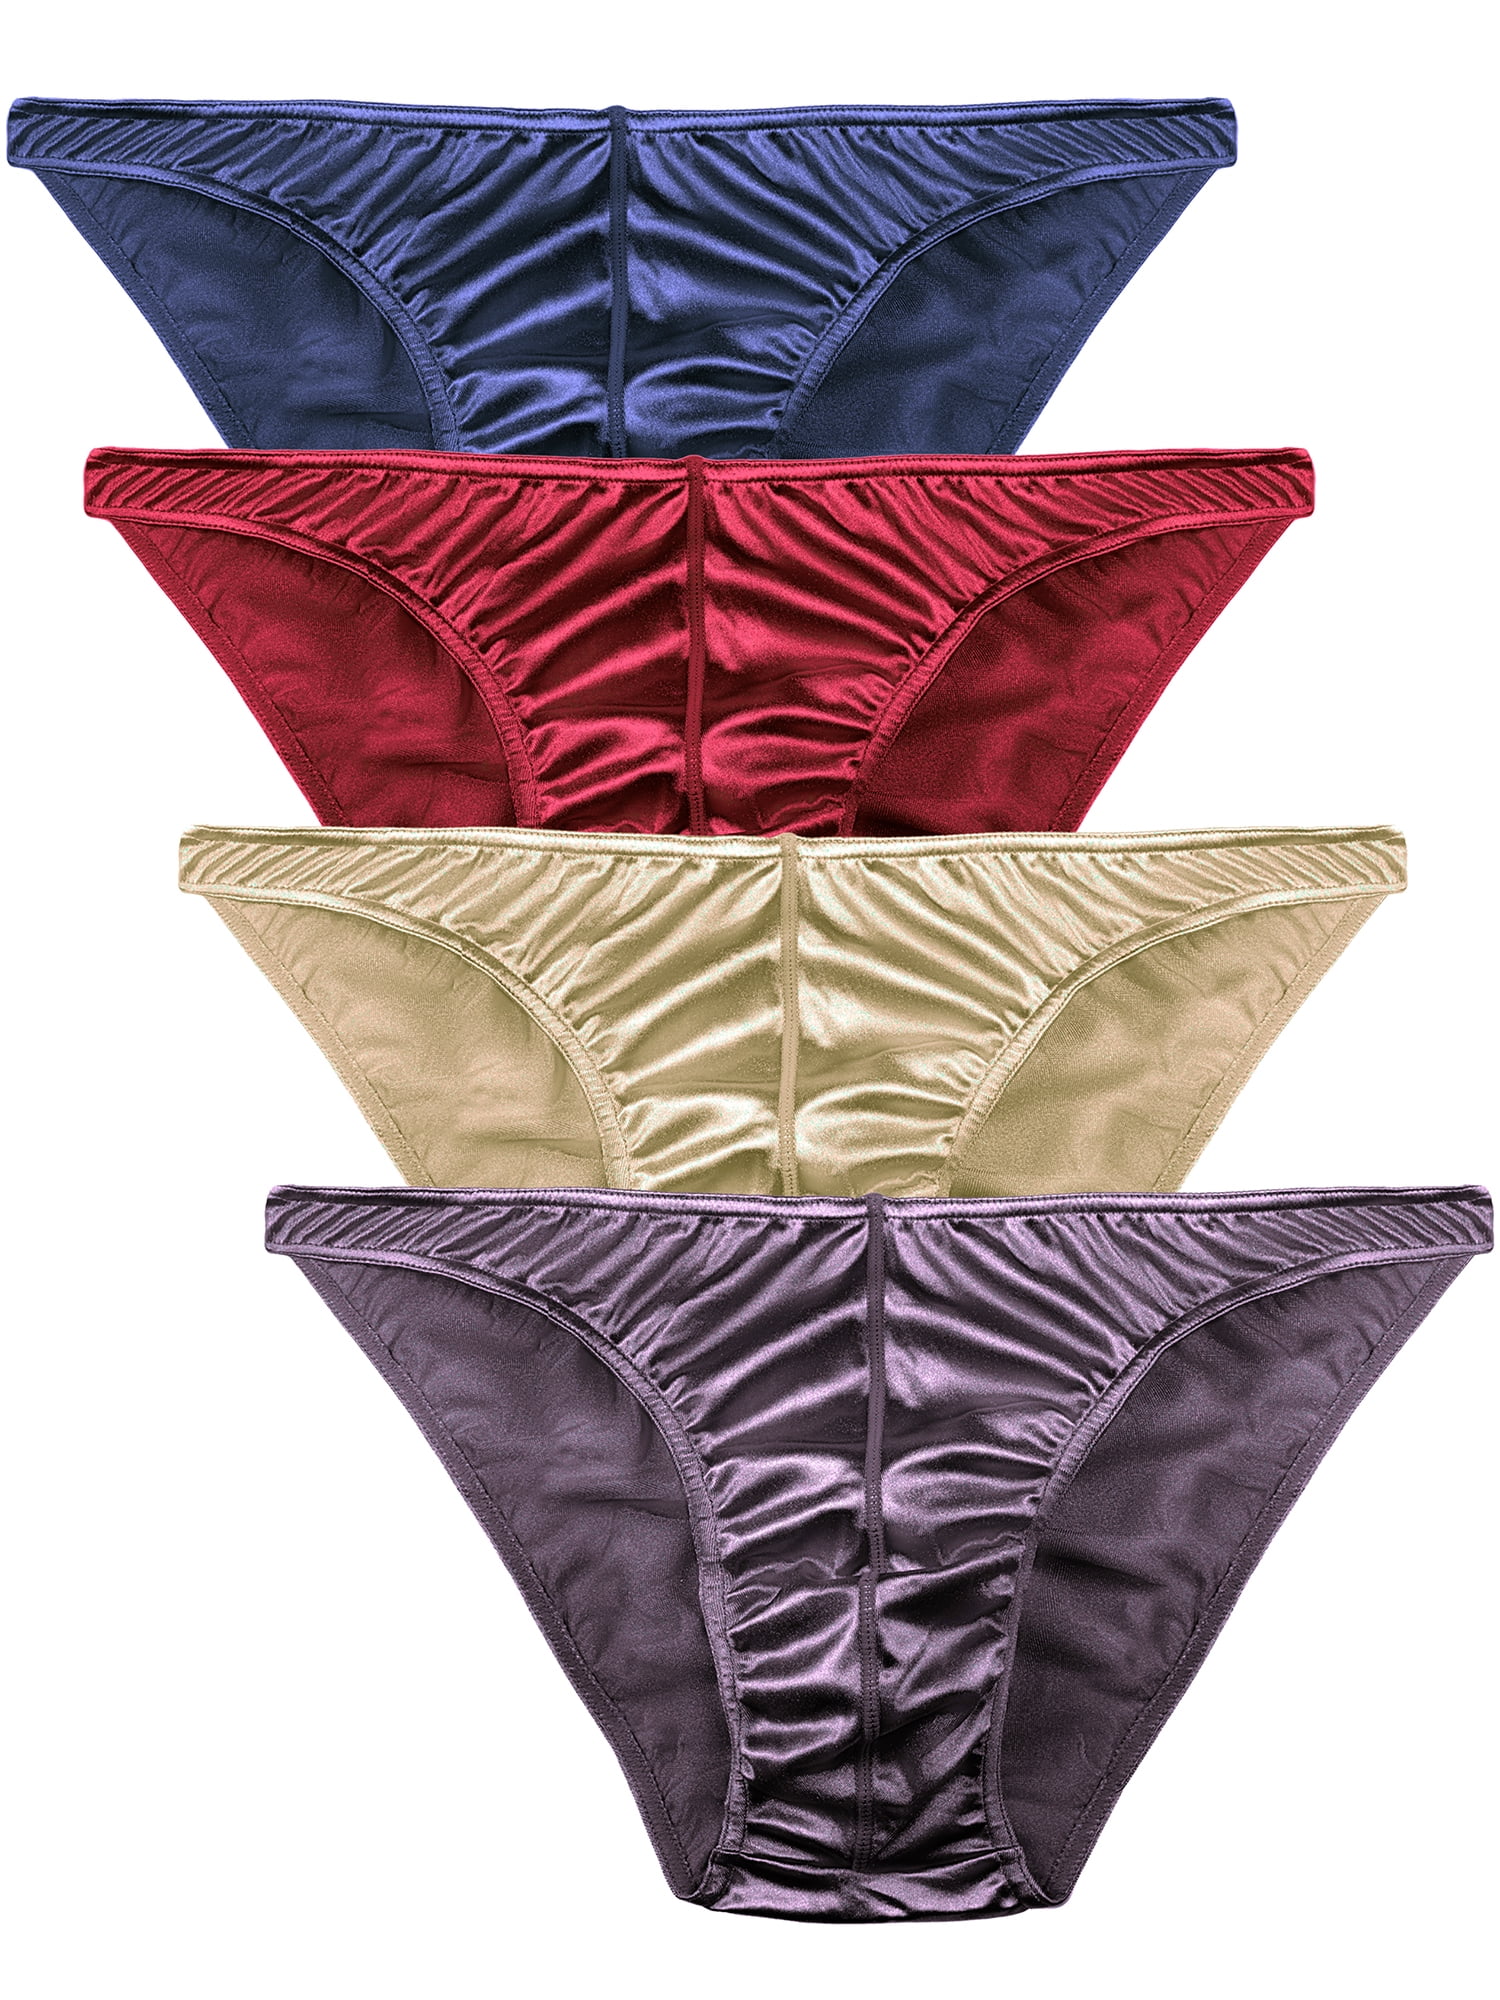 Men Smooth Silky Bulge Brazilian Bikini Underwear Contoured Pouch Skimpy Briefs 